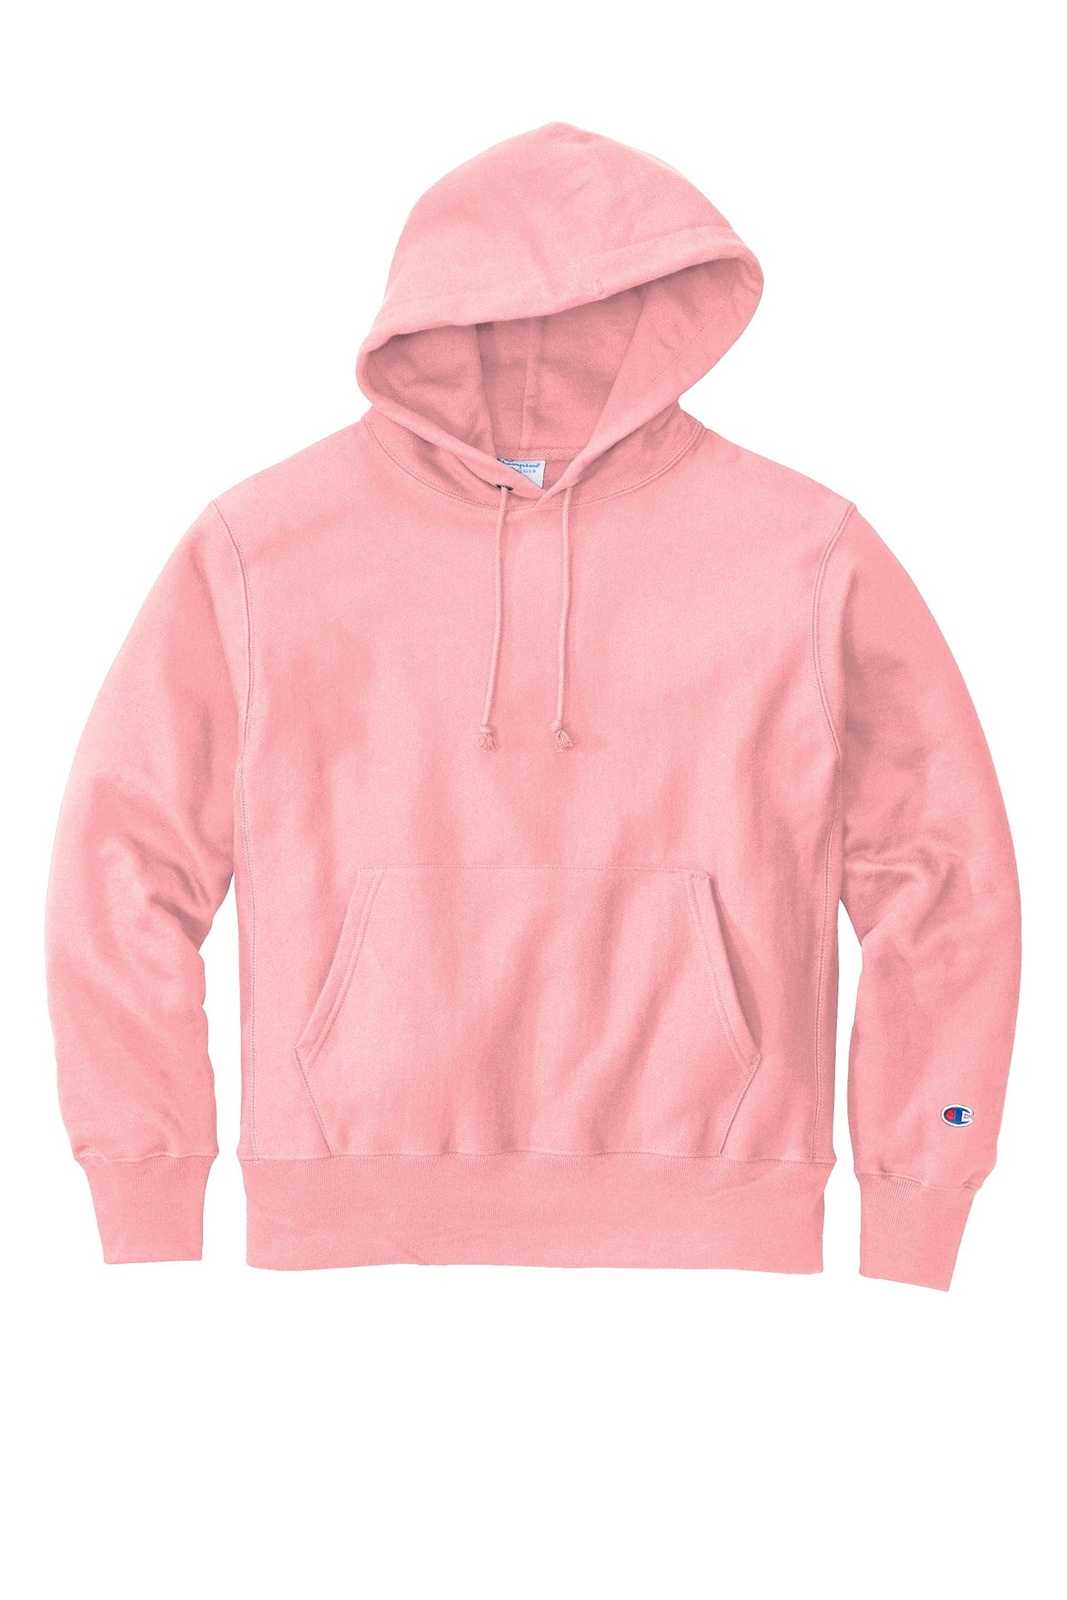 Champion S101 Reverse Weave Hooded Sweatshirt - Pink Candy